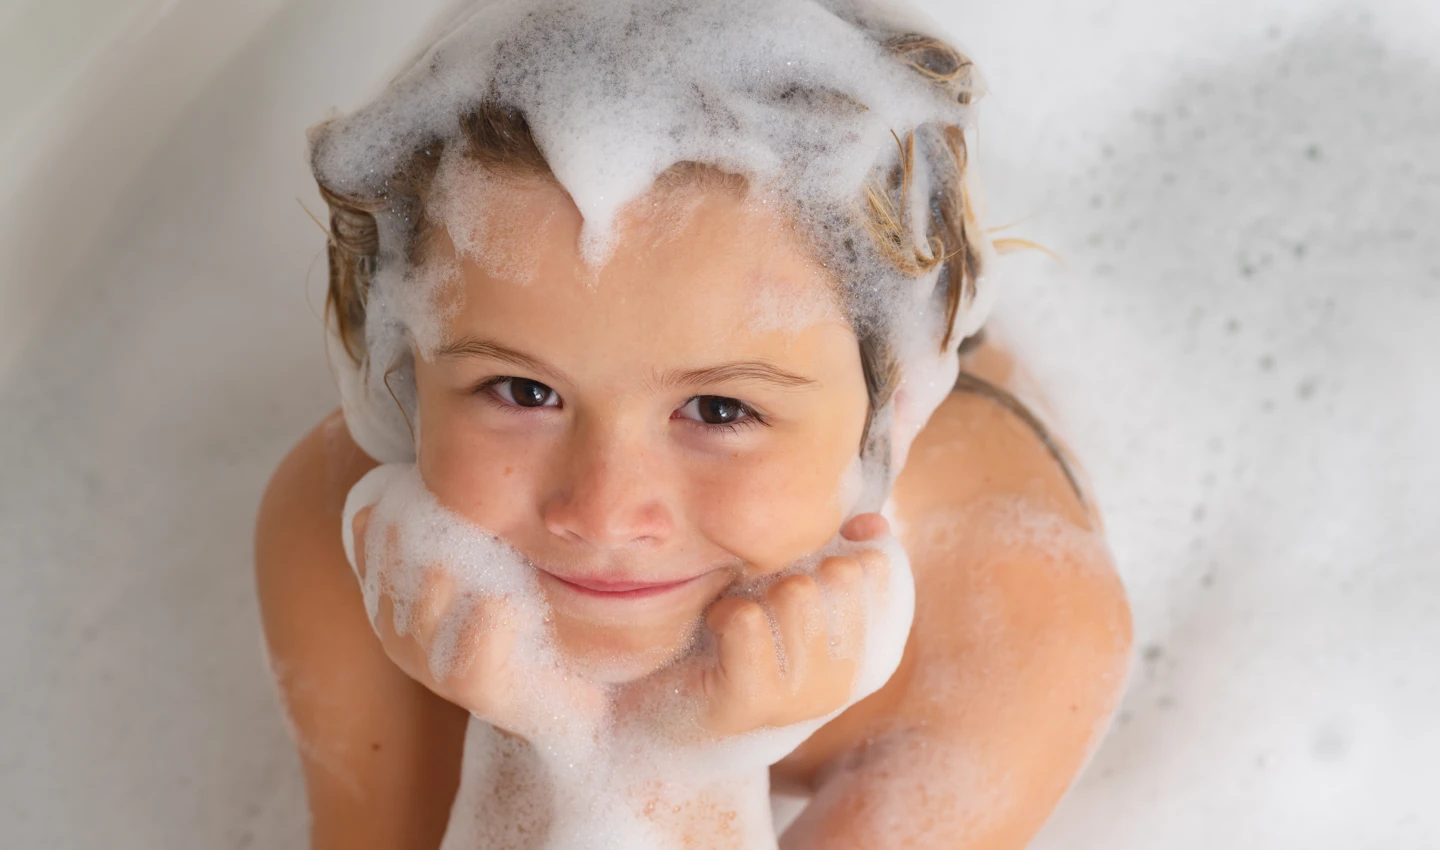 Child with shampoo foam and bubbles on hair enjoying a bath with Sulfate-Free Kids Shampoo